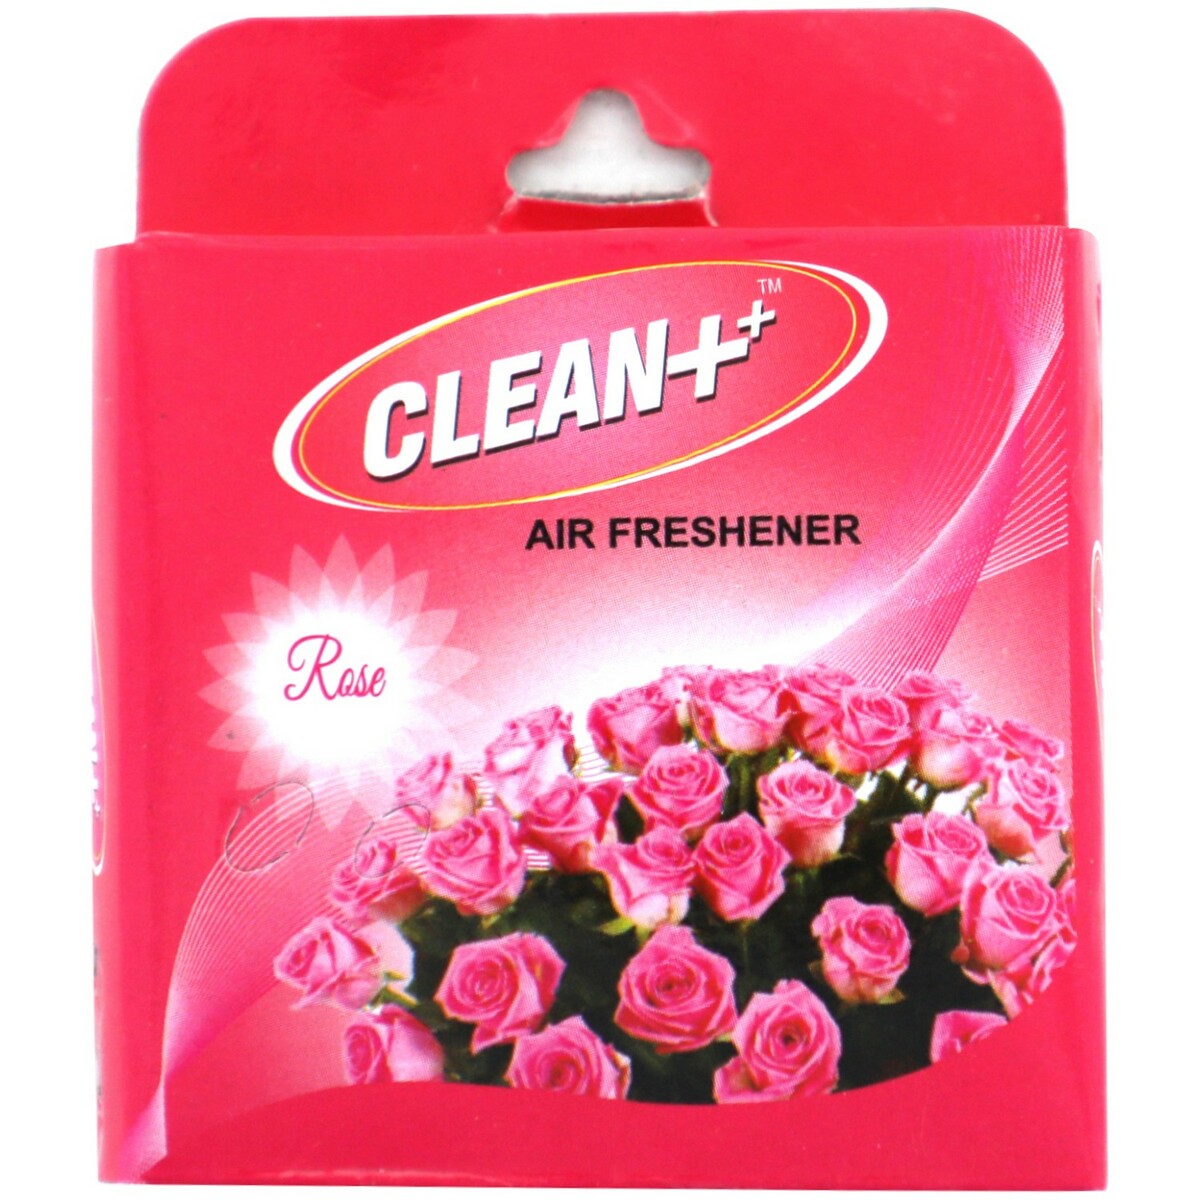 Clean Plus Air Freshener Rose 50g